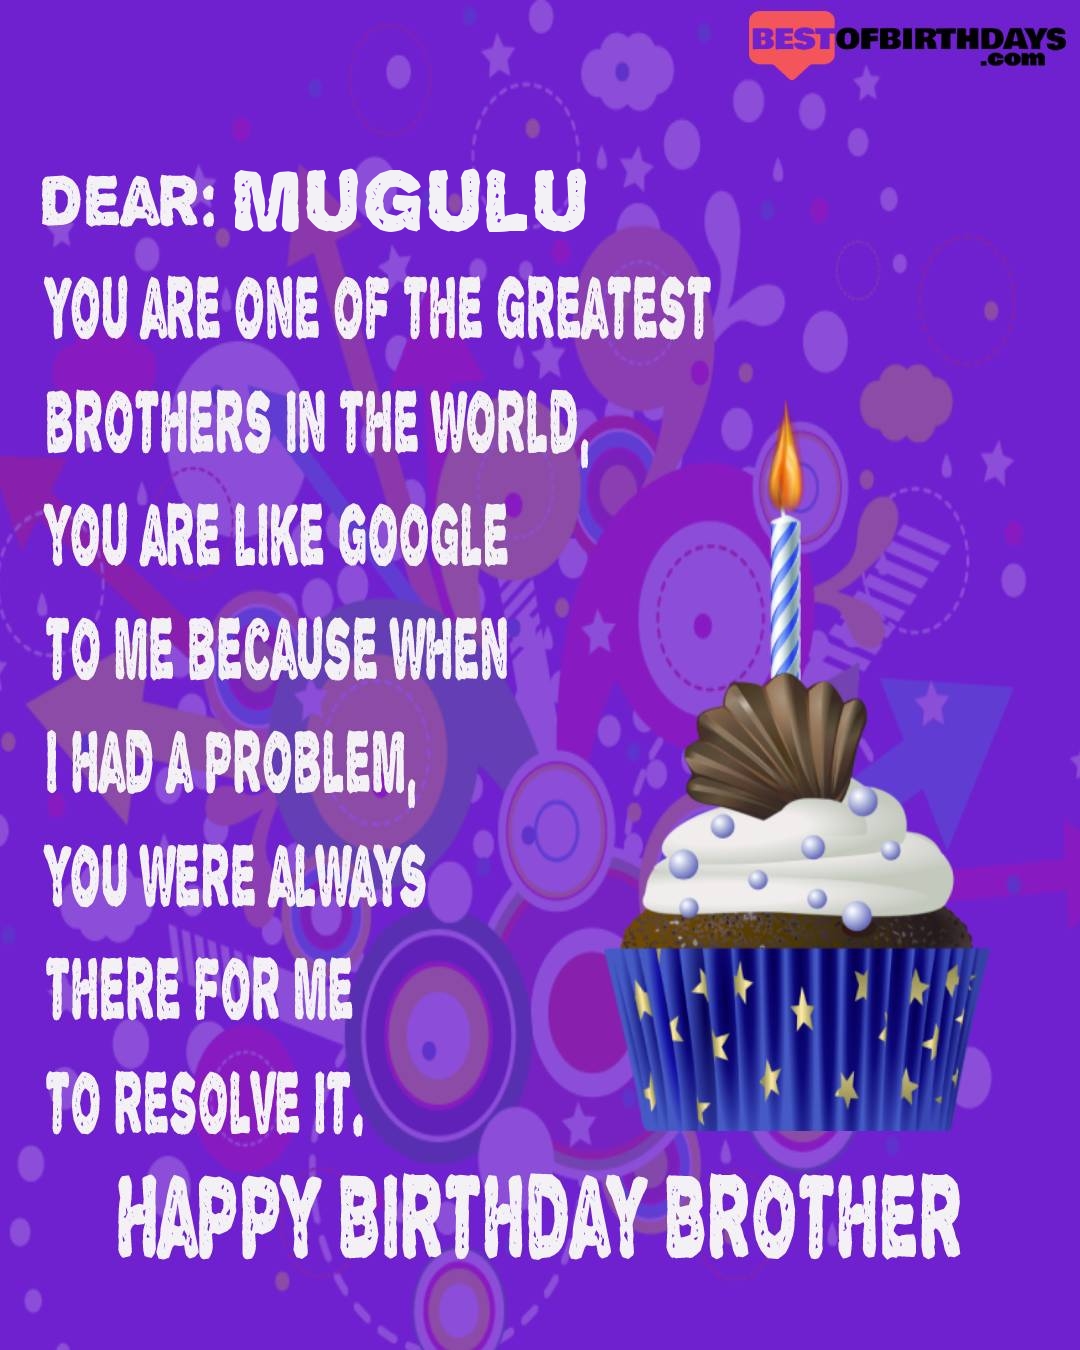 Happy birthday mugulu bhai brother bro